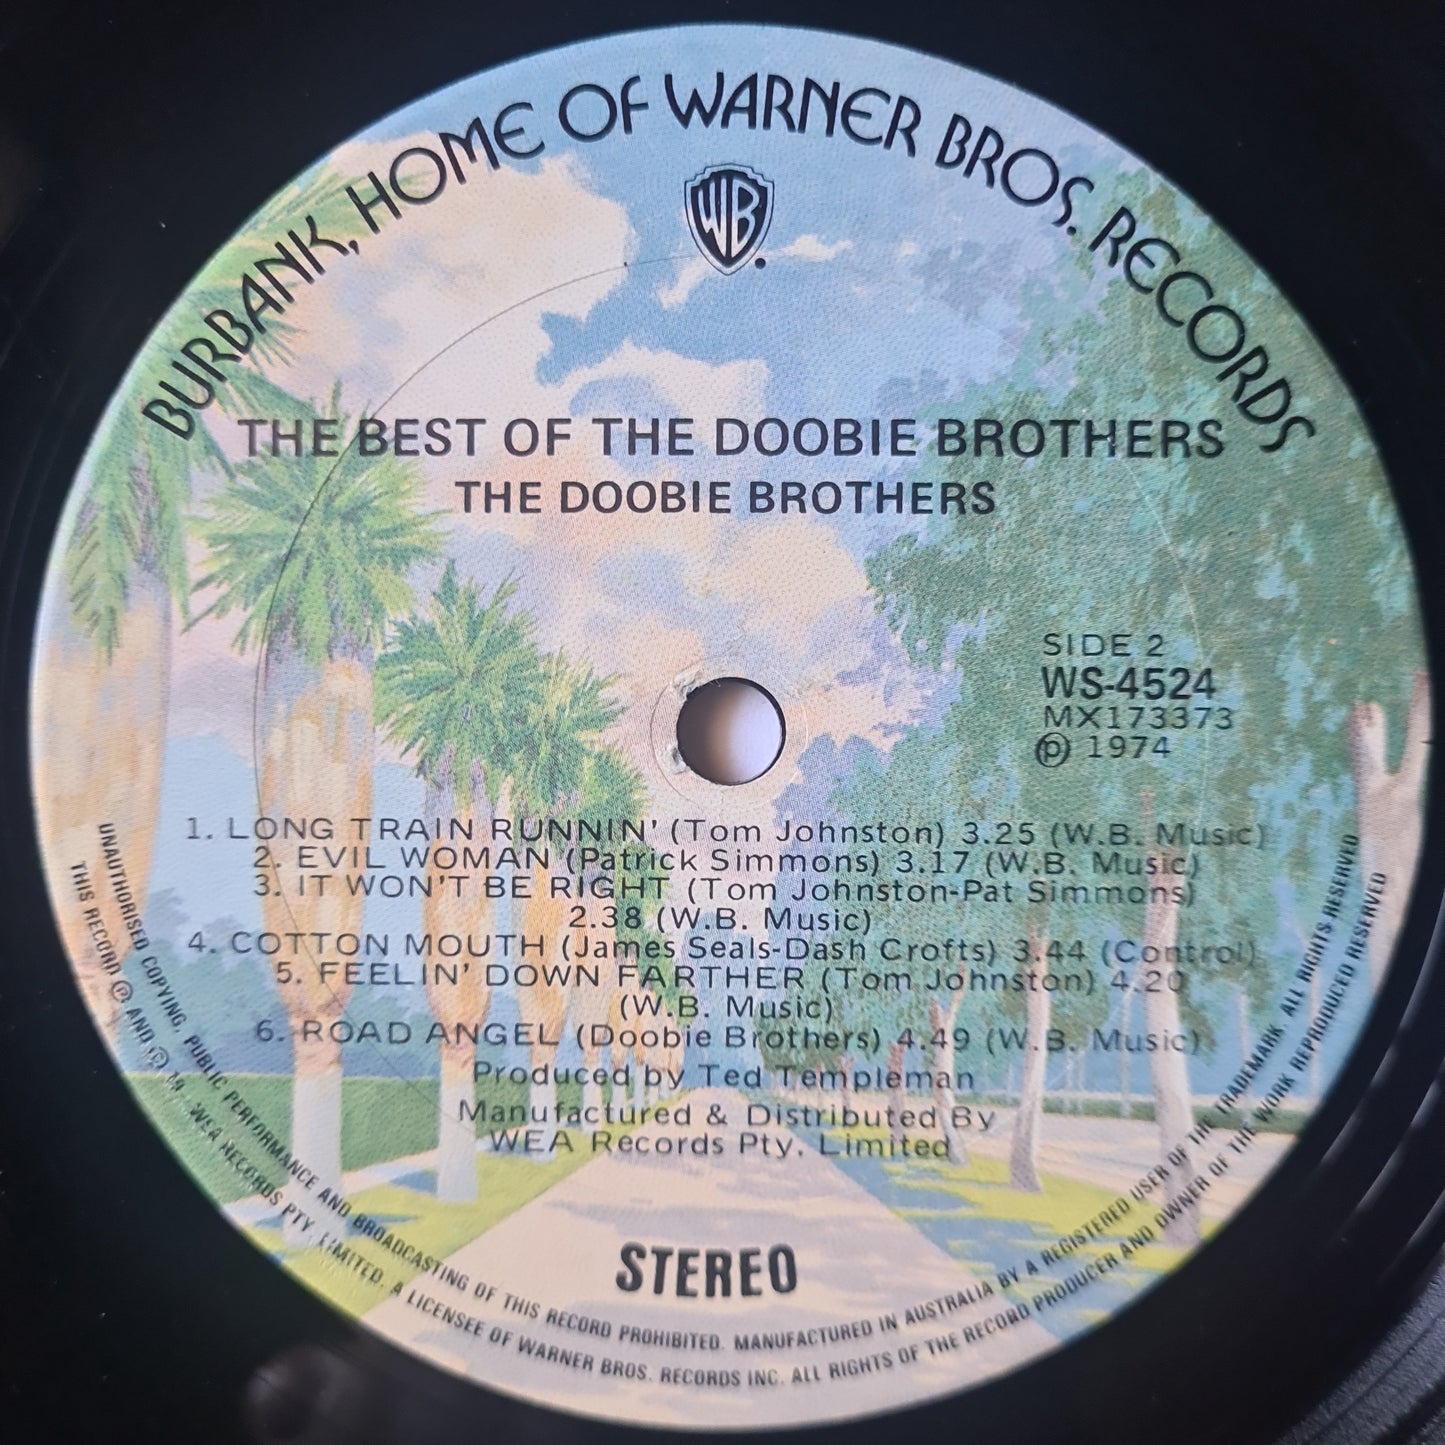 The Doobie Brothers – The Best Of The Doobie Brothers - 1974